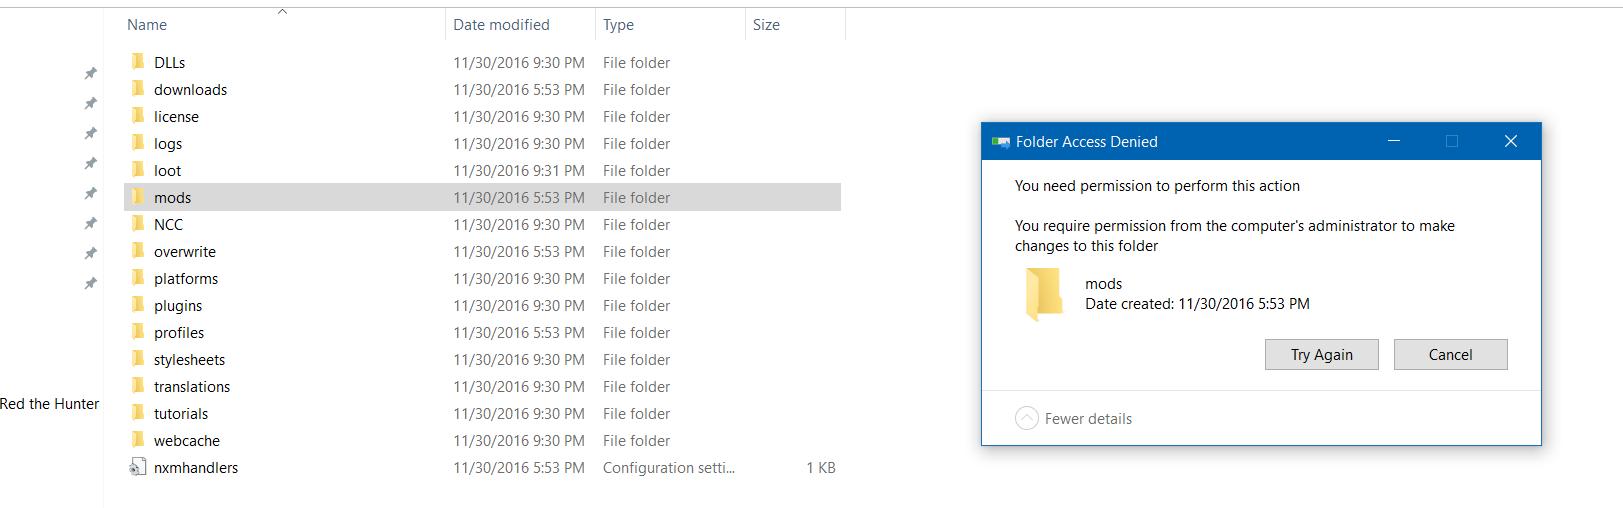 igfxem module denies access to my folders - Intel Communities